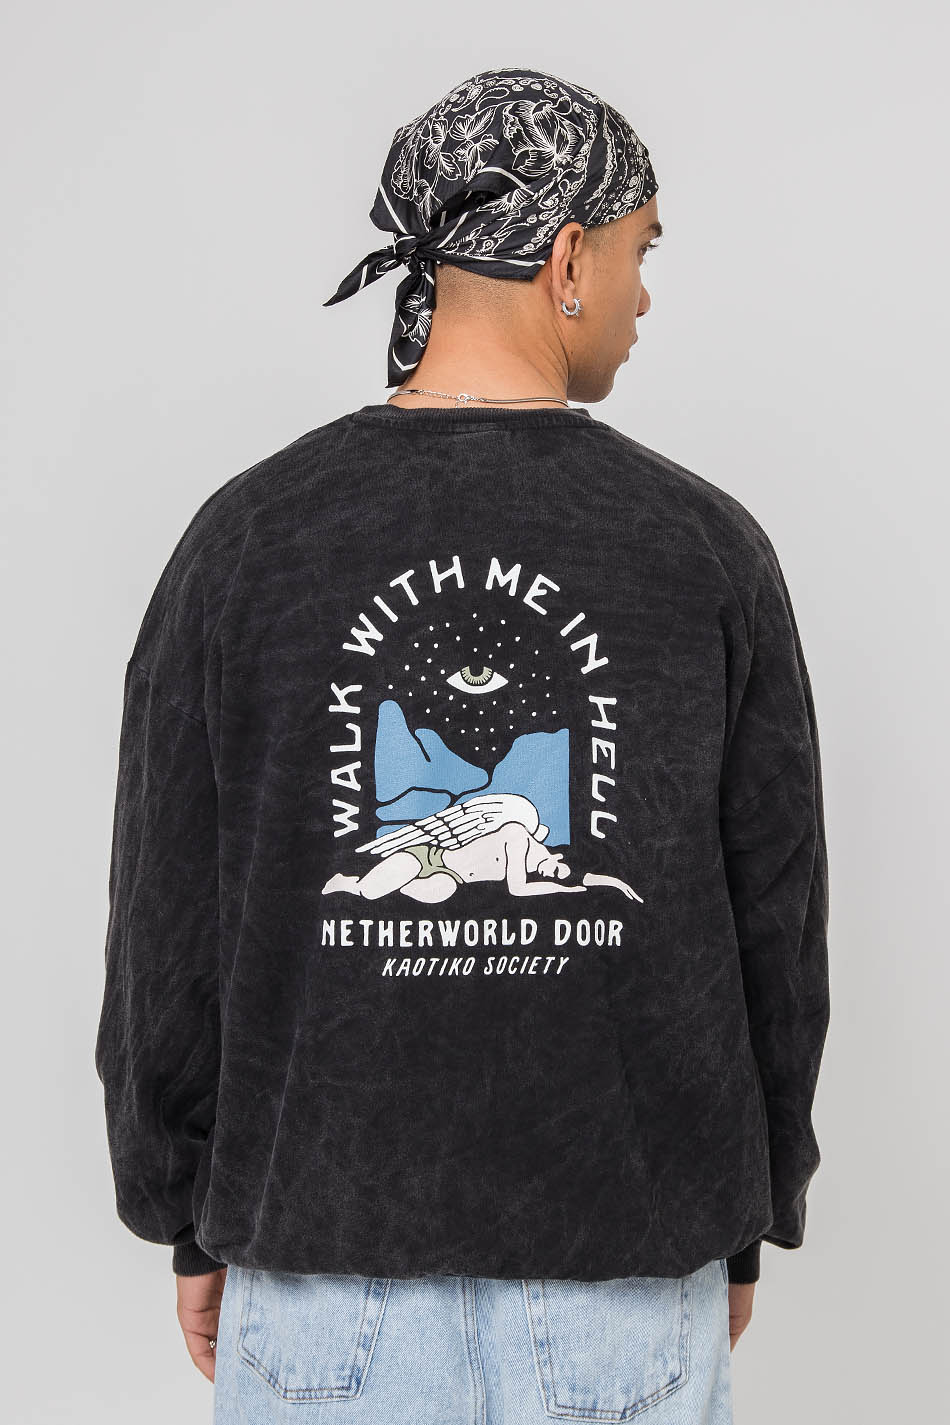 Washed Netherworld Door Sweatshirt